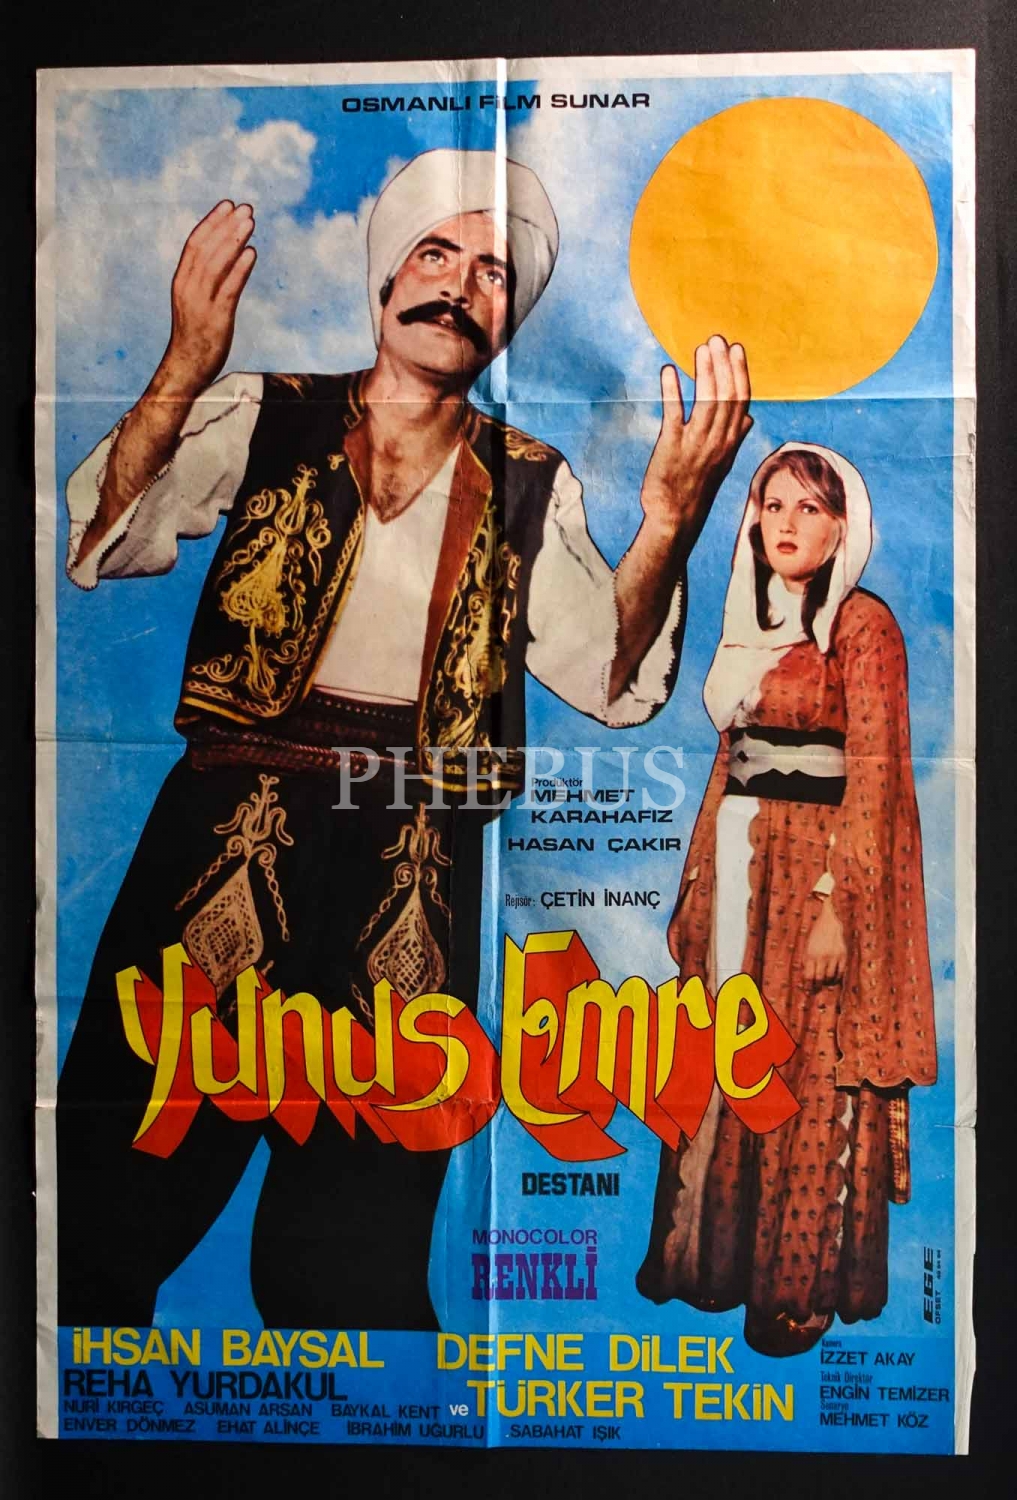 YUNUS EMRE DESTANI, İhsan Batsal & Defne Dilek & Reha Yurdakul, Osmanlı Film, Ege Ofset, 68x100 cm...